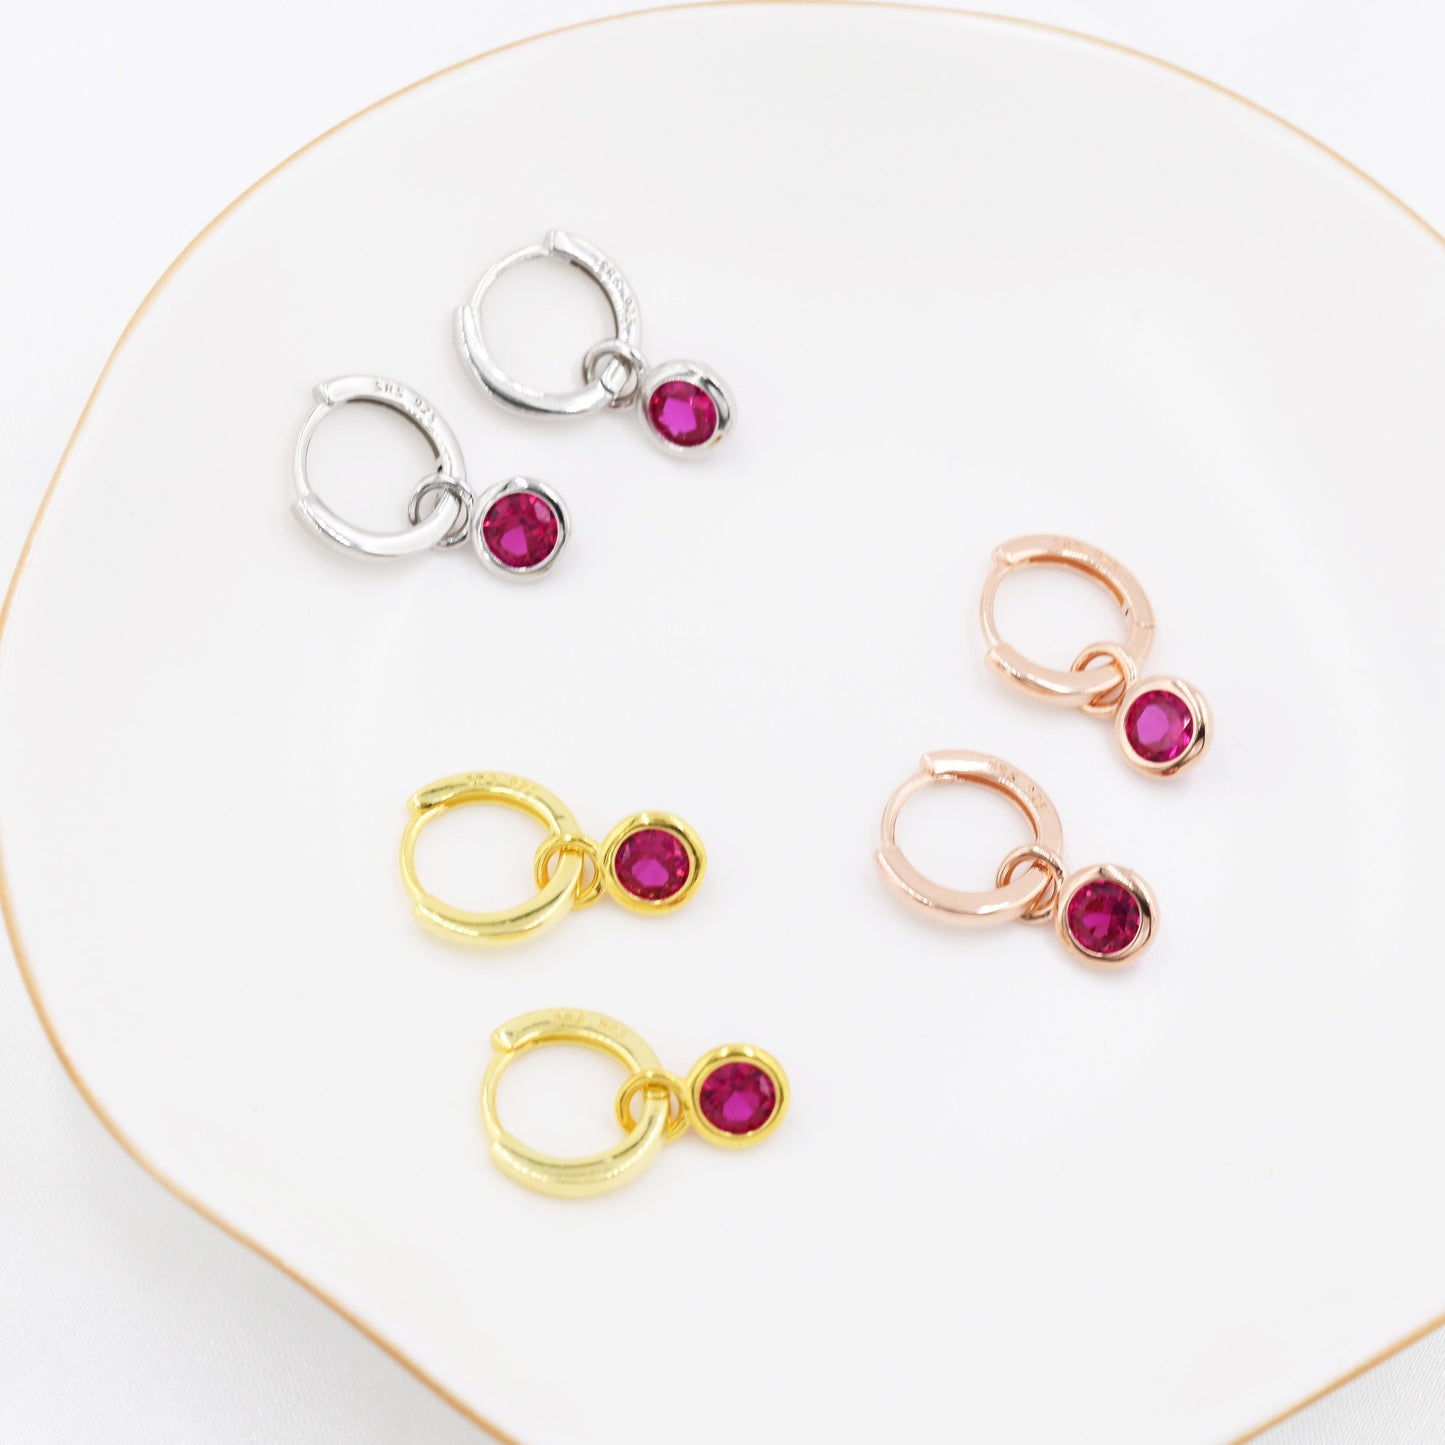 July Birthstone Ruby Red Crystal Drop Hoop Earrings in Sterling Silver, Detachable Dangle Earrings, Silver, Gold, Rose Gold